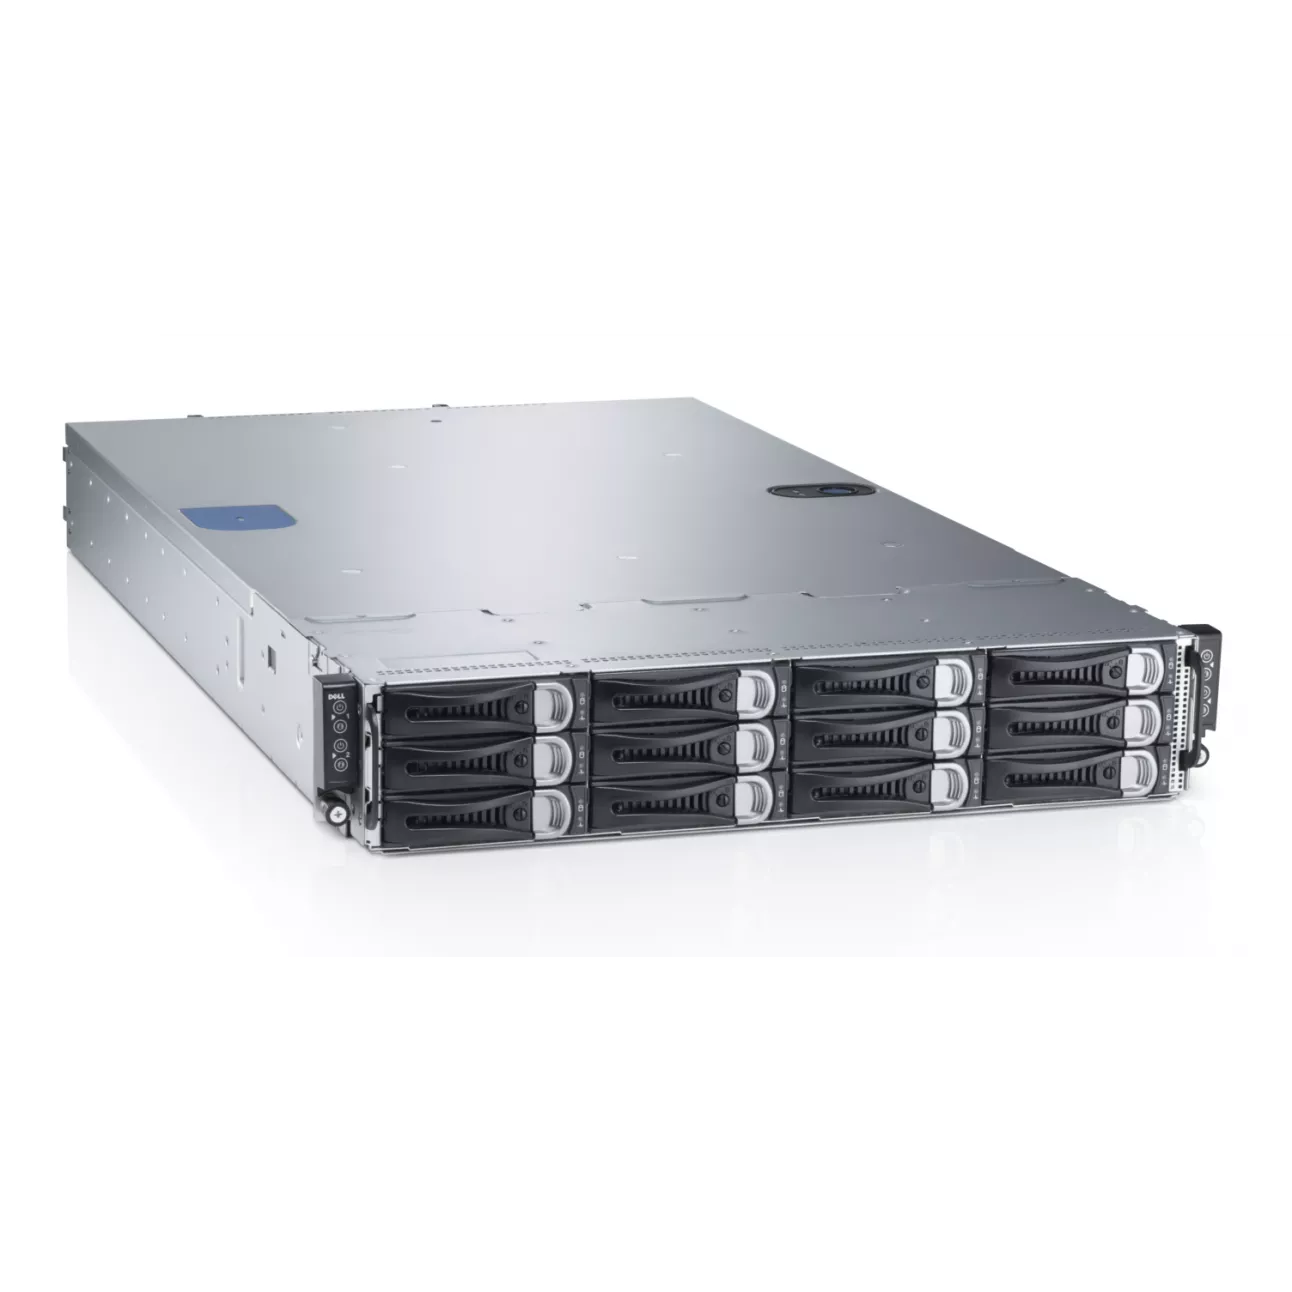 Сервер Dell PowerEdge C6220, 8 процессоров Intel Xeon 8C E5-2670 2.60GHz, 128GB DRAM